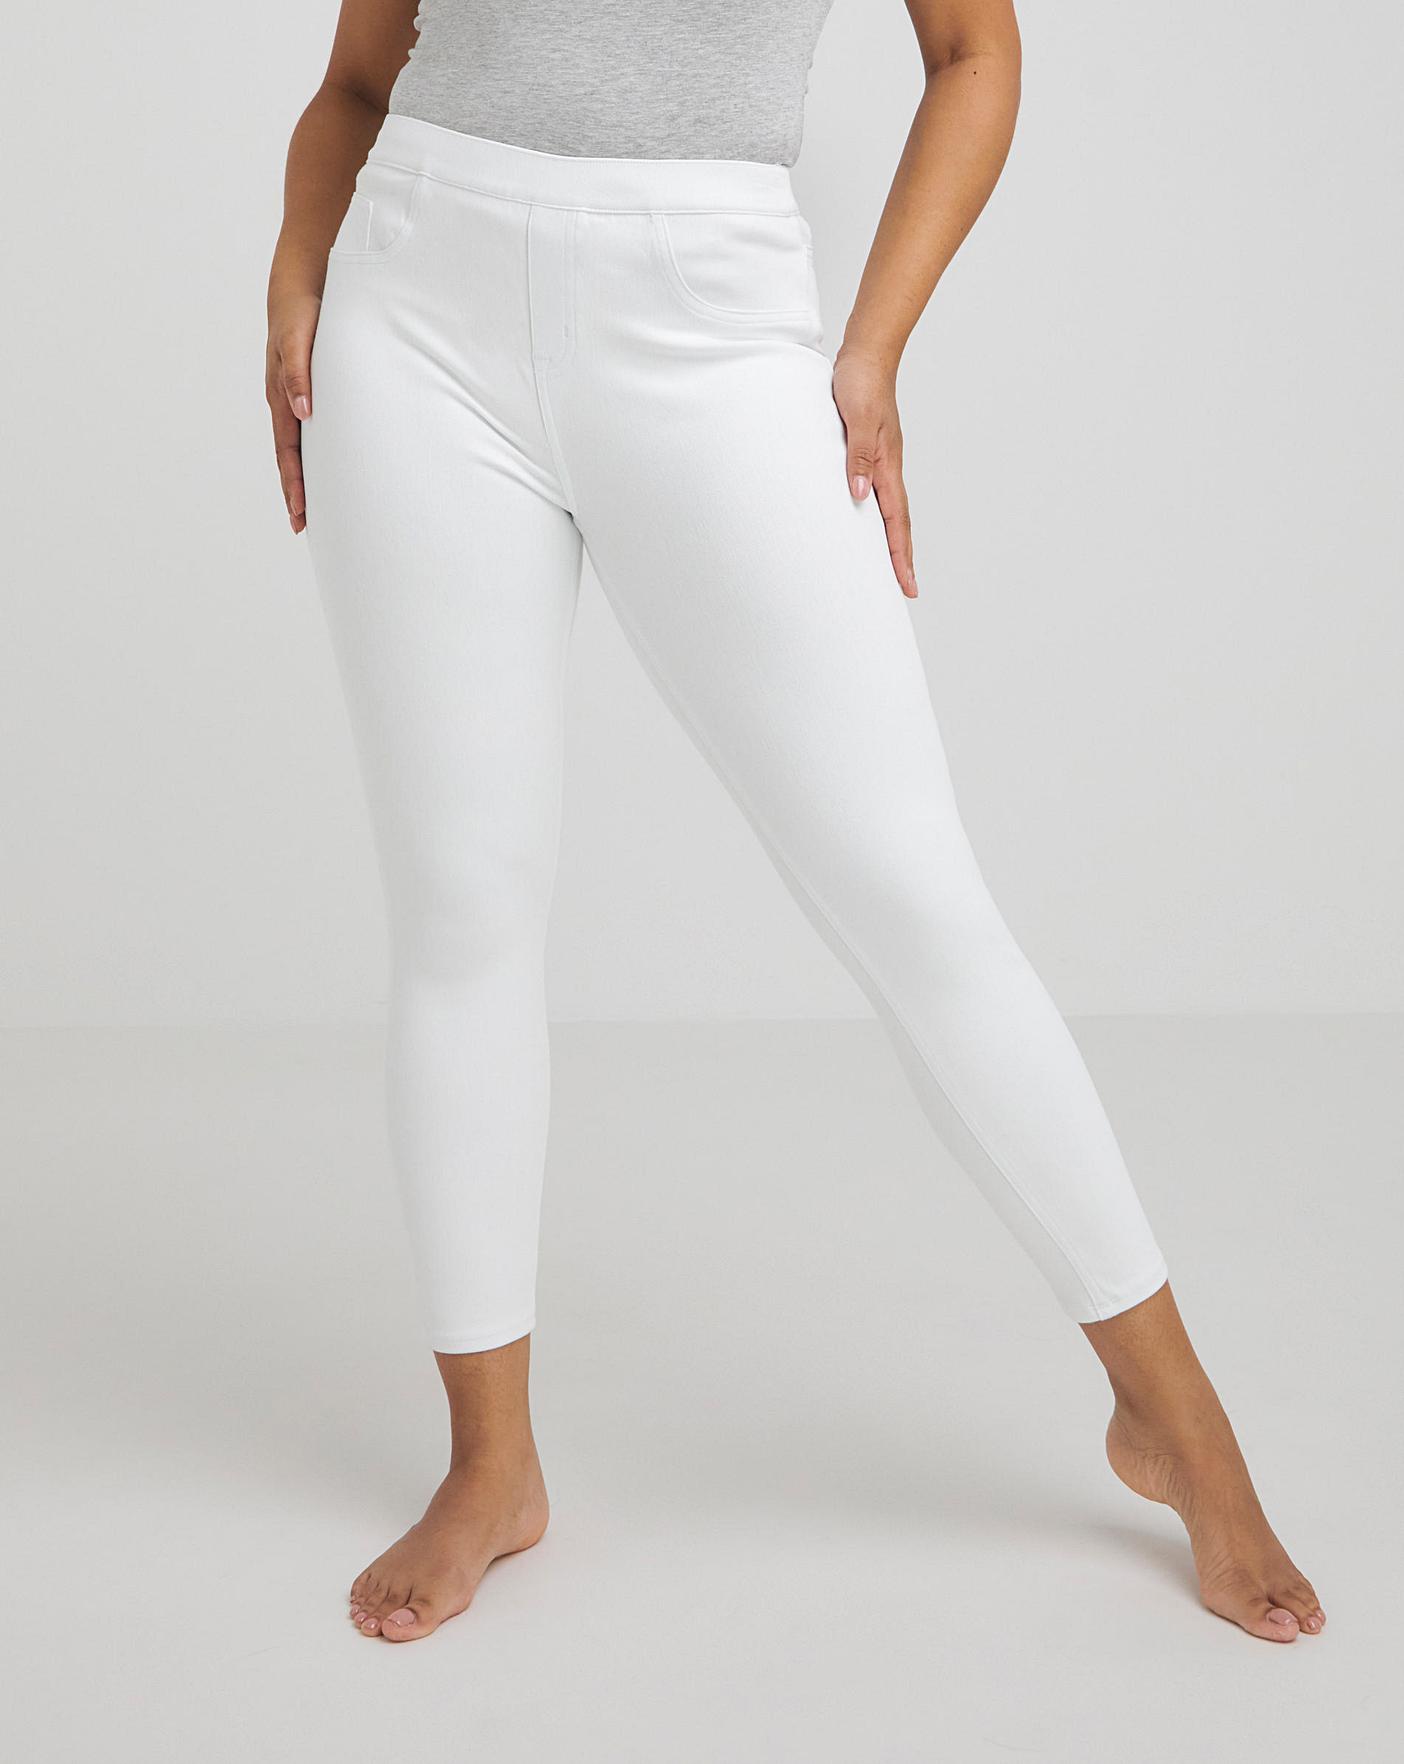 Spanx Womens White Jean Ish Capri Stretch Pull-on Leggings Pants